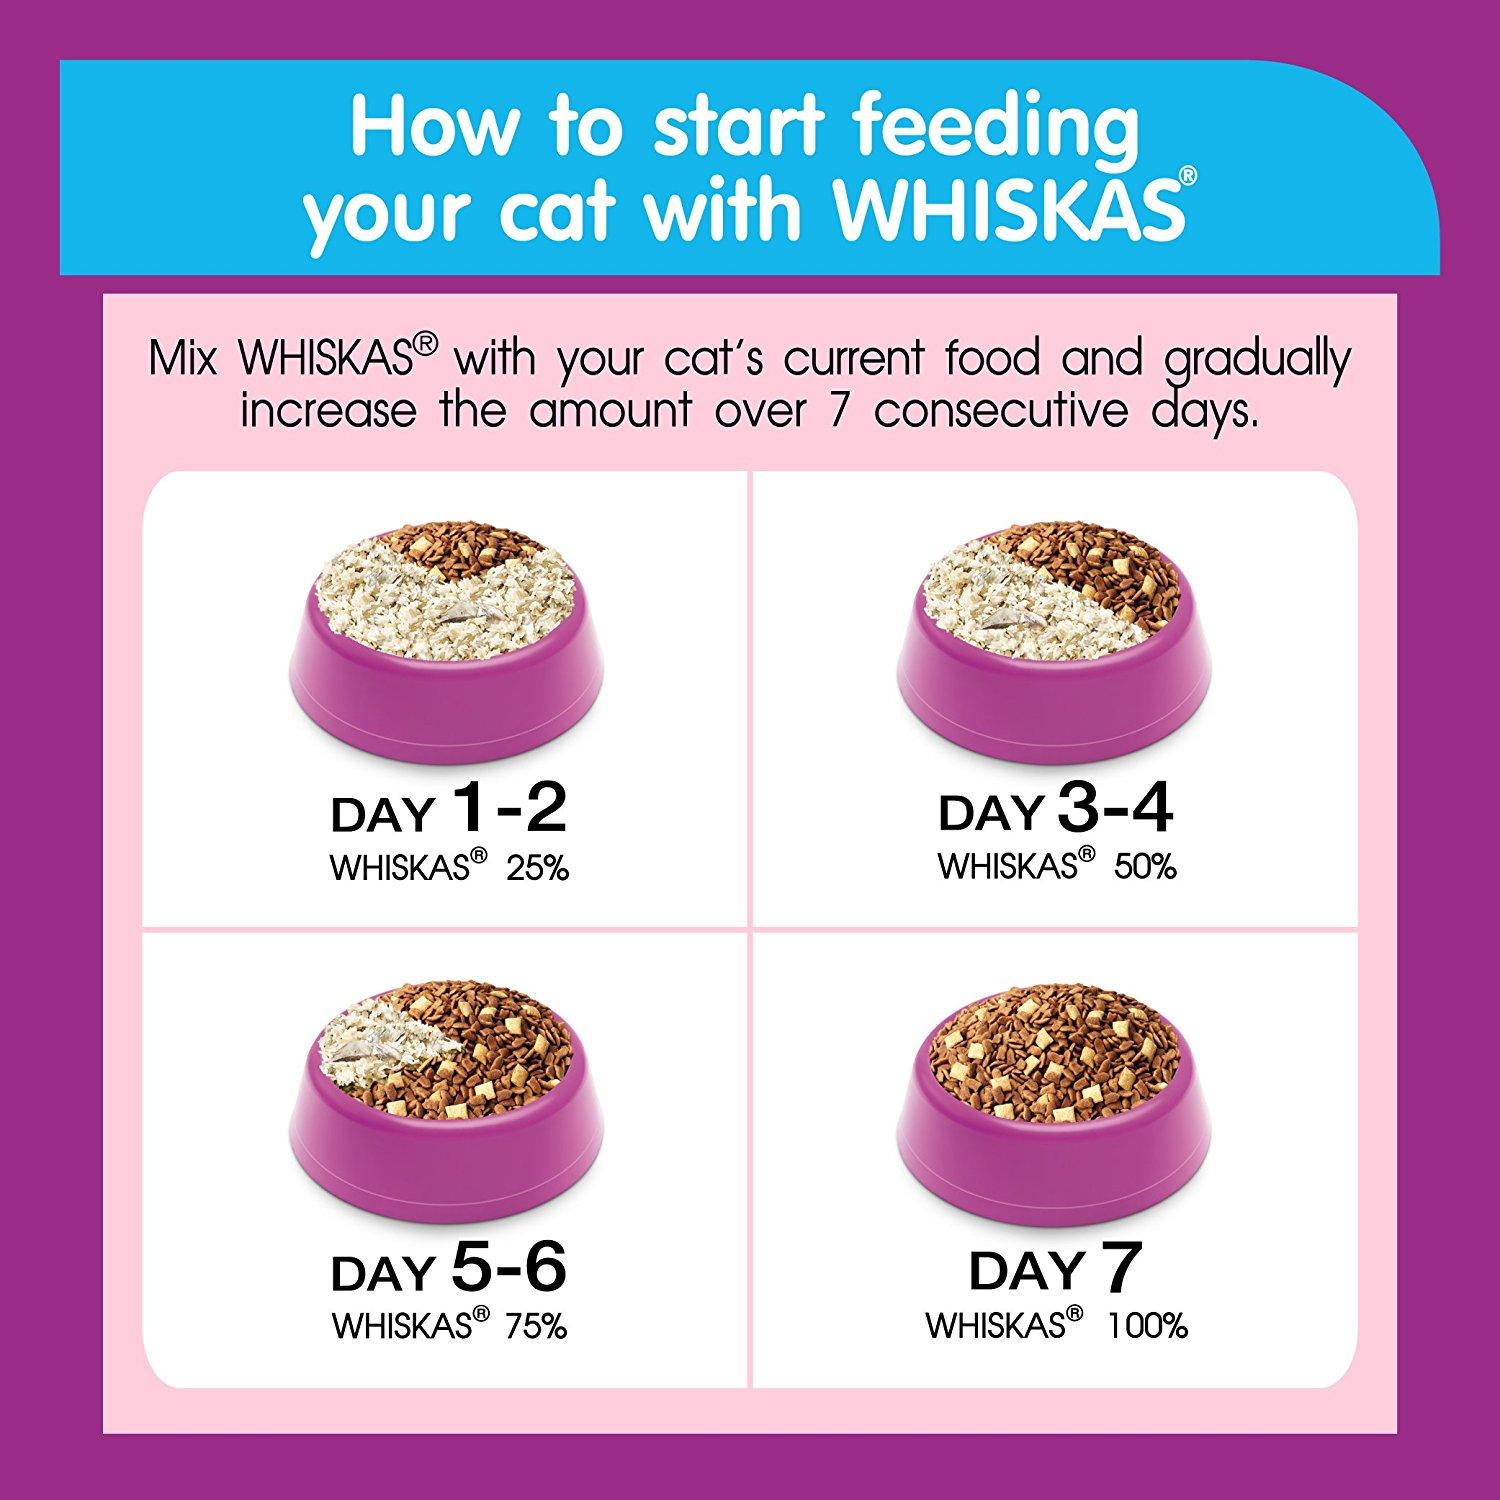 Whiskas Grilled Saba อาหารแมว อาหารเม็ด รสปลาซาบะย่าง พ็อกเกตส์ สำหรับแมวอายุ 1 ปีขึ้นไป (1.2 กิโลกรัม/ถุง) x 2 ถุง